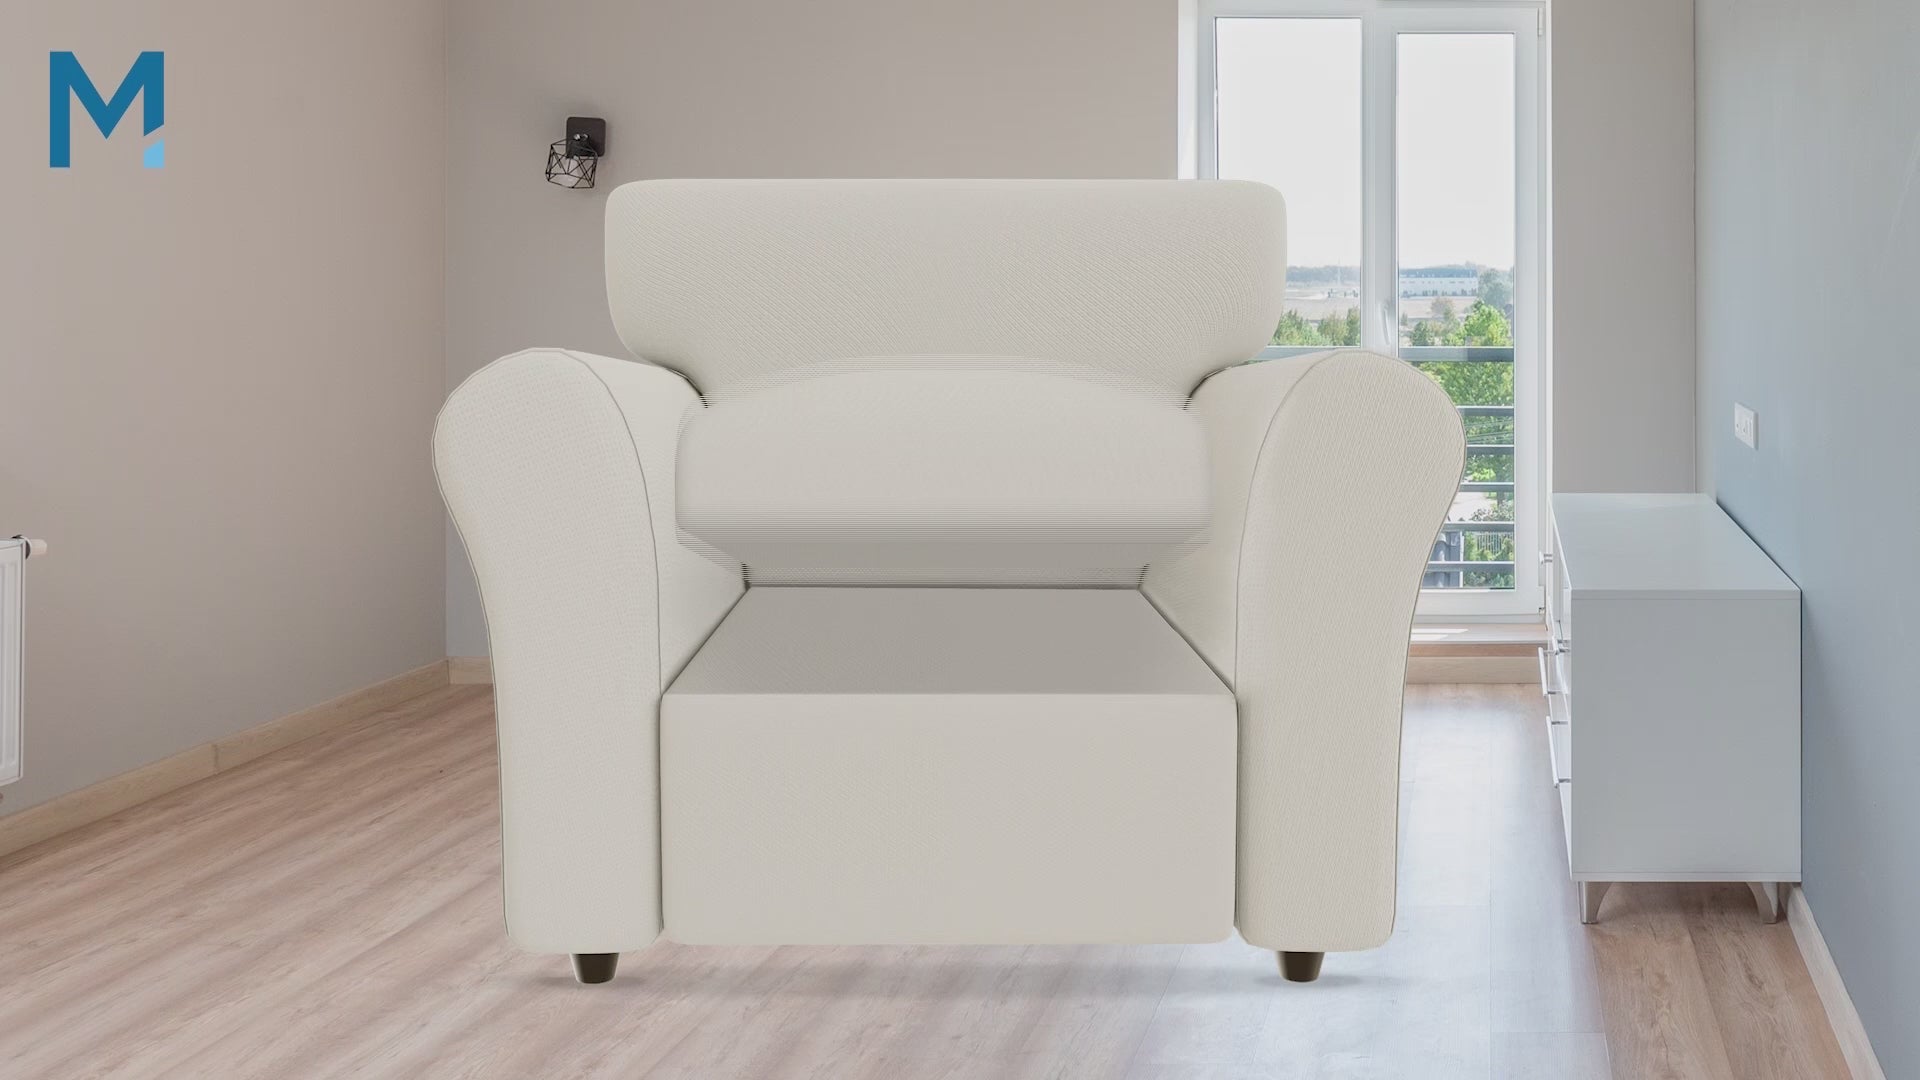 Meliusly MeliuslyA Sagging Chair Cushion Support (17x22) - Recliner Chair Cushion Support for Sagging Seat, Furniture Seat Saver Chair Su